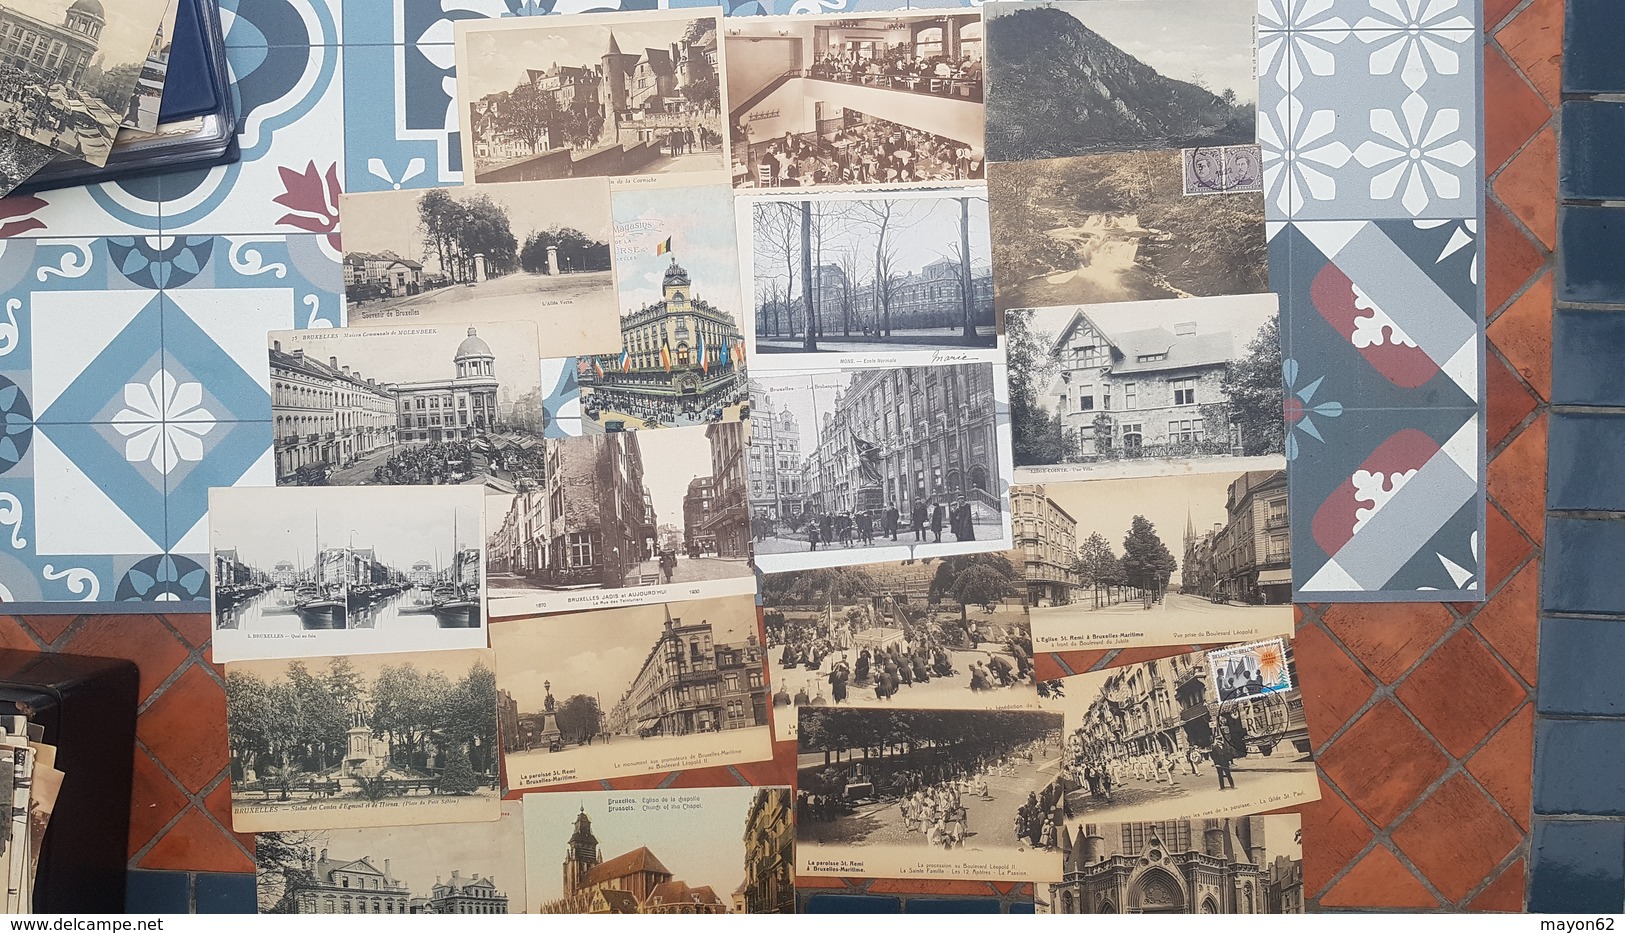 Lot de + de 450 cartes postales de Belgique Lot van 450 postkaarten van België - cpa precurseurs